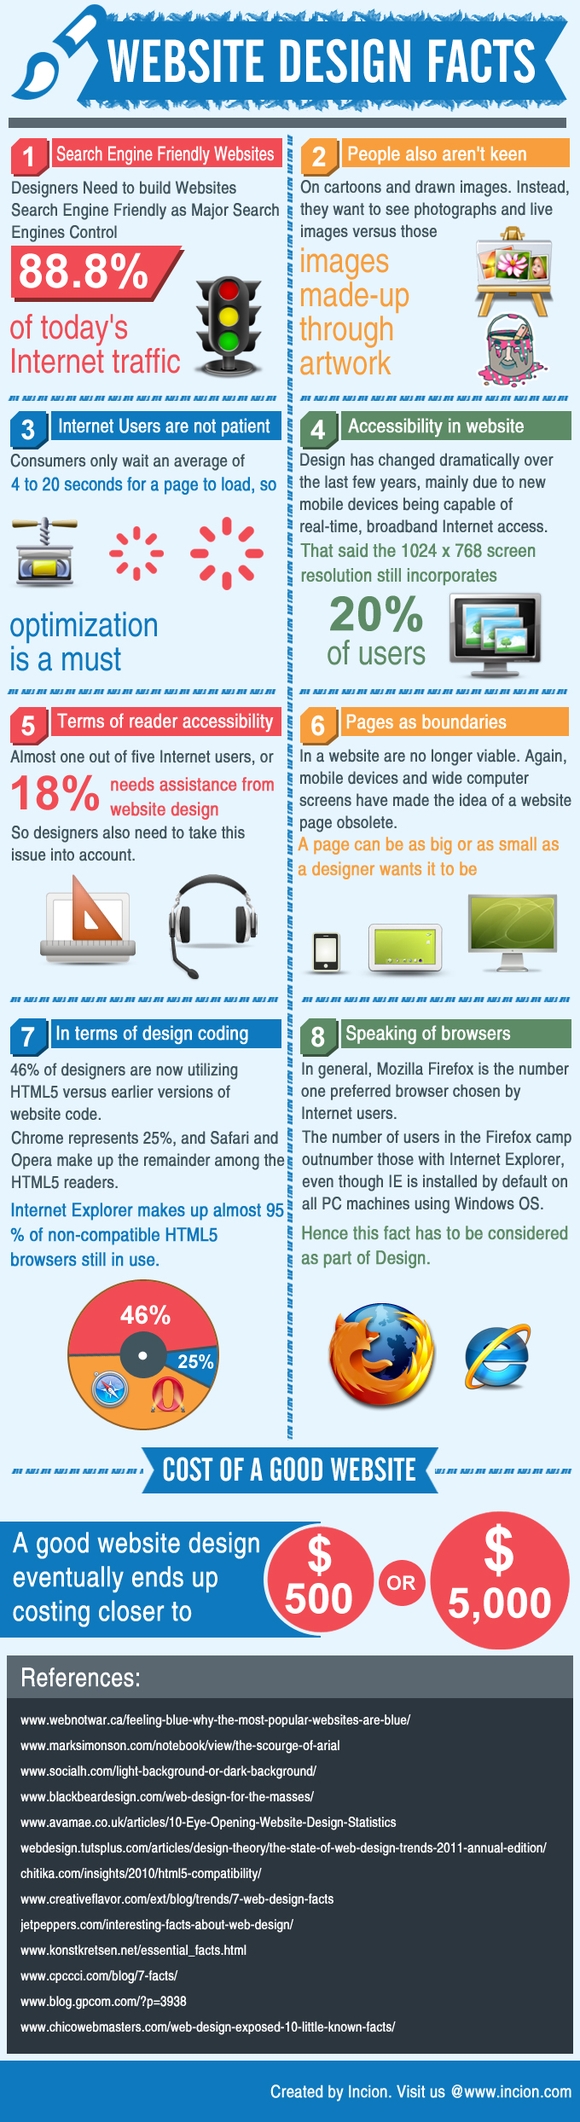 Website Design Facts